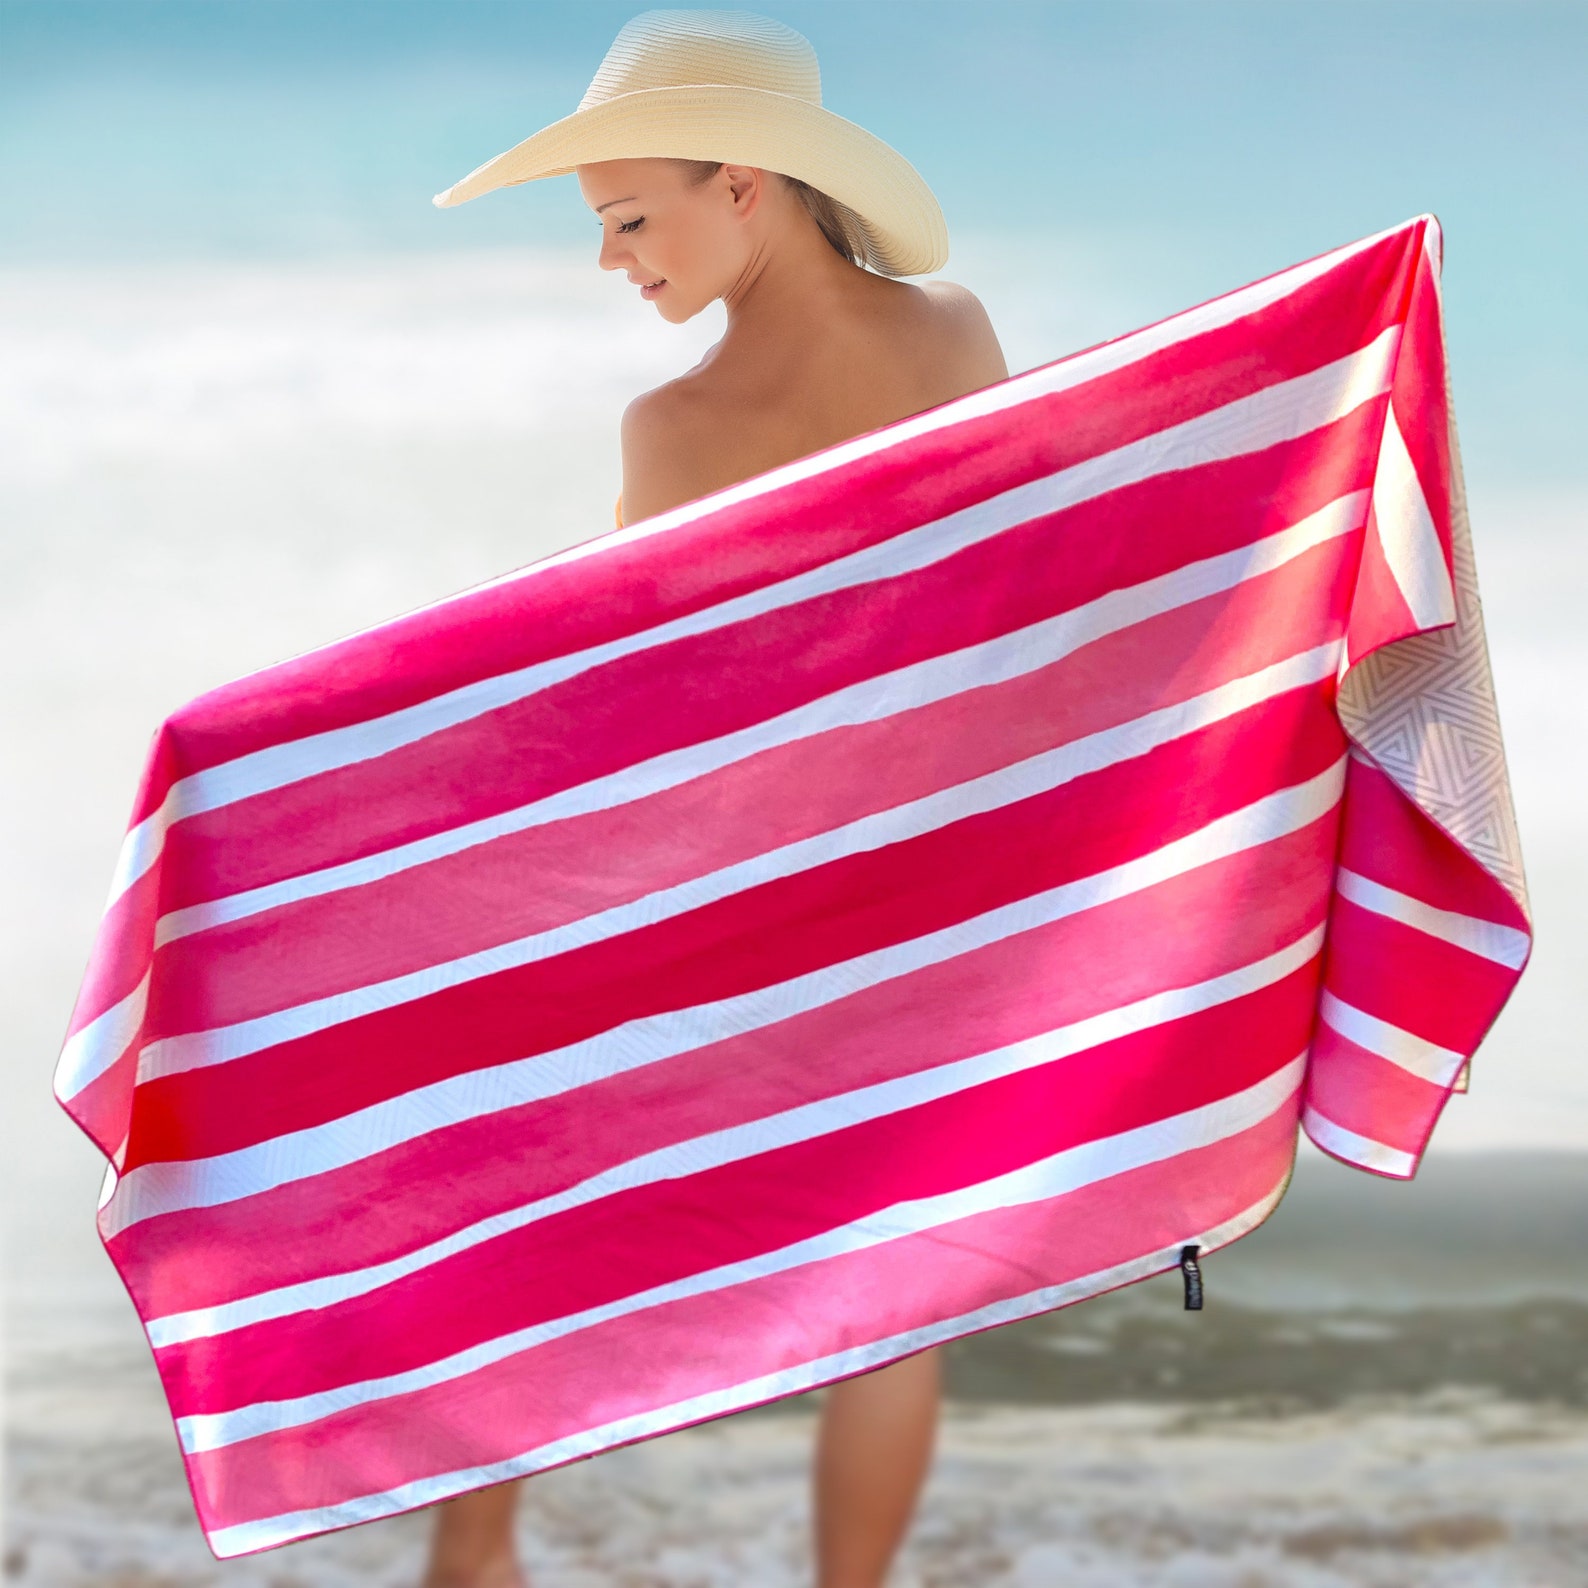 Microfiber beach towels